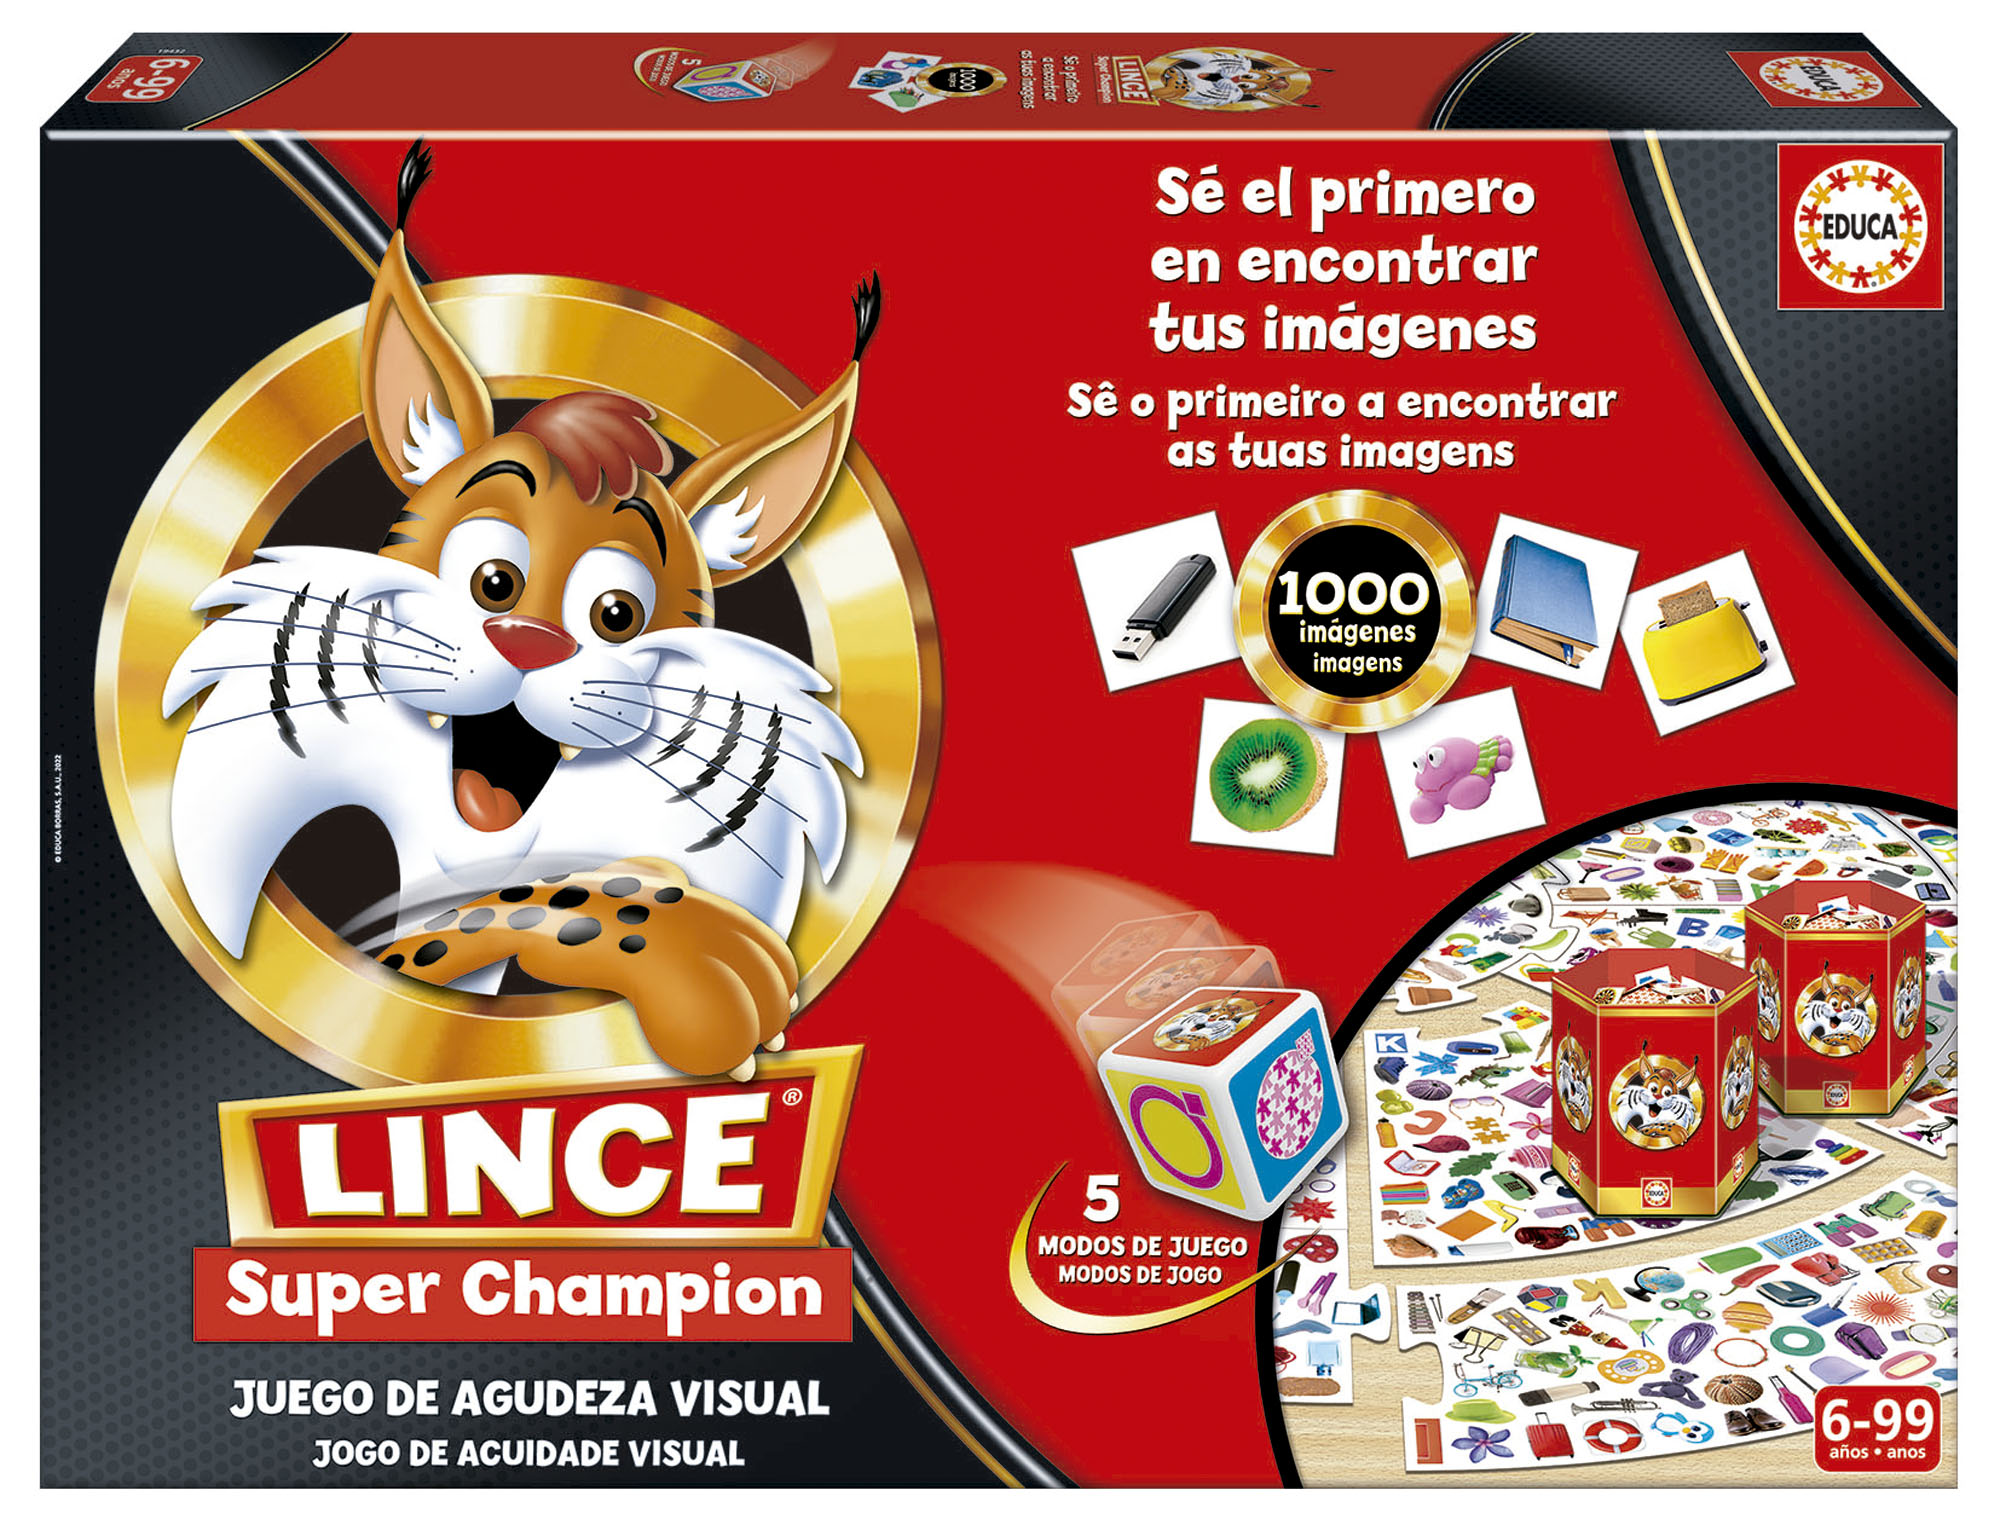 Lince Super Champion 1000 imagens - Educa Borras